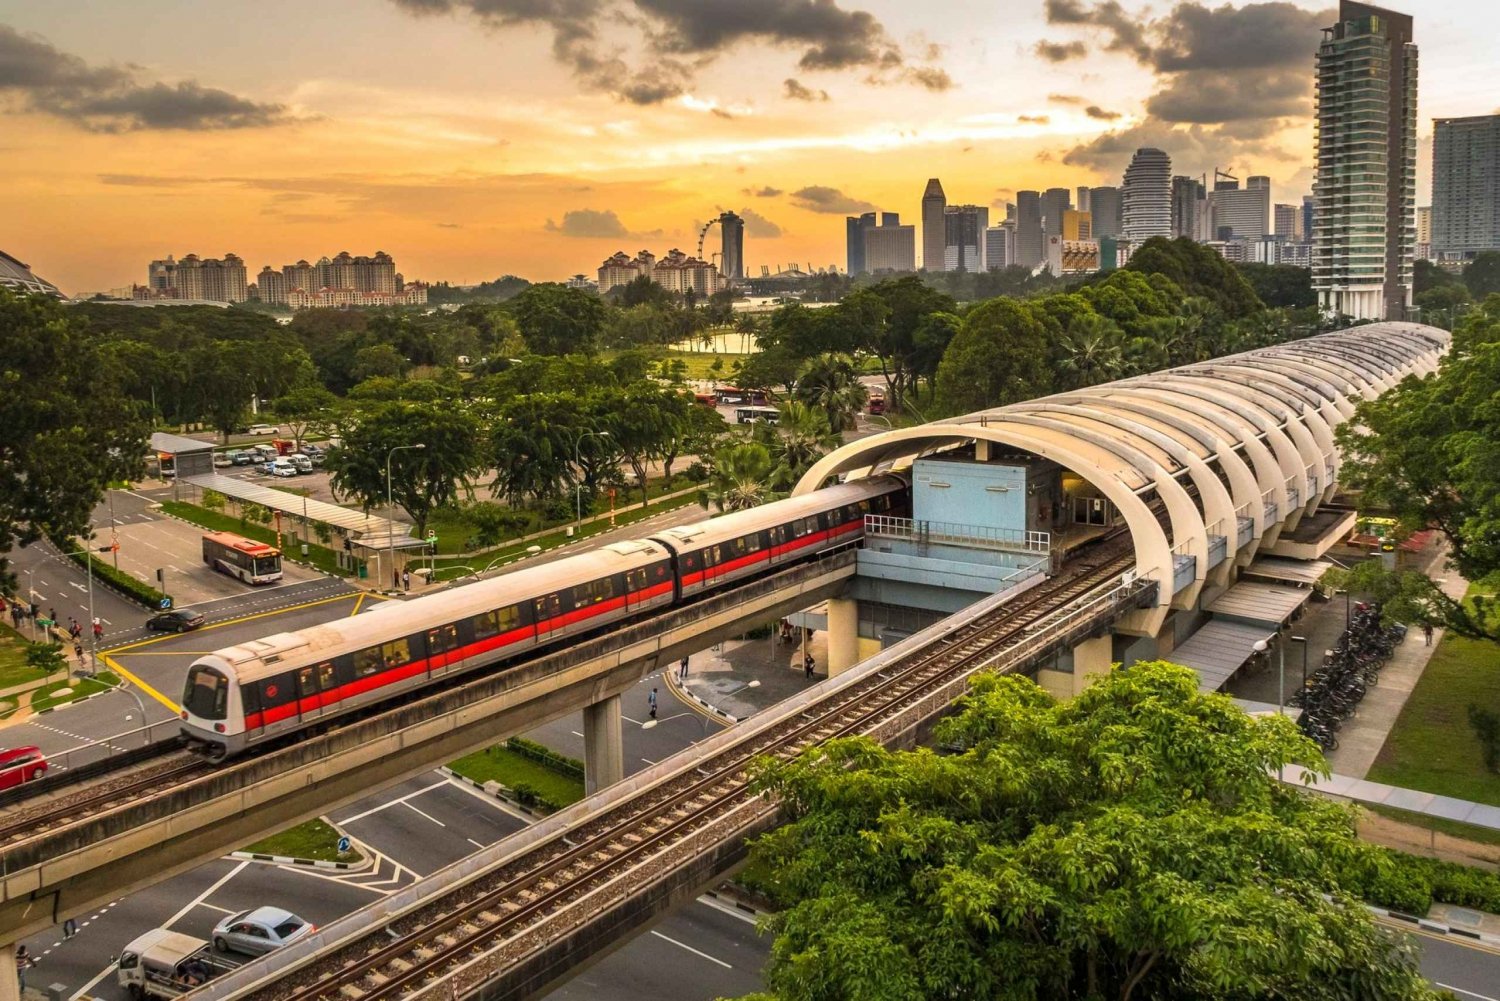 Singapore: Guided Public Transport Tour & Local Culture